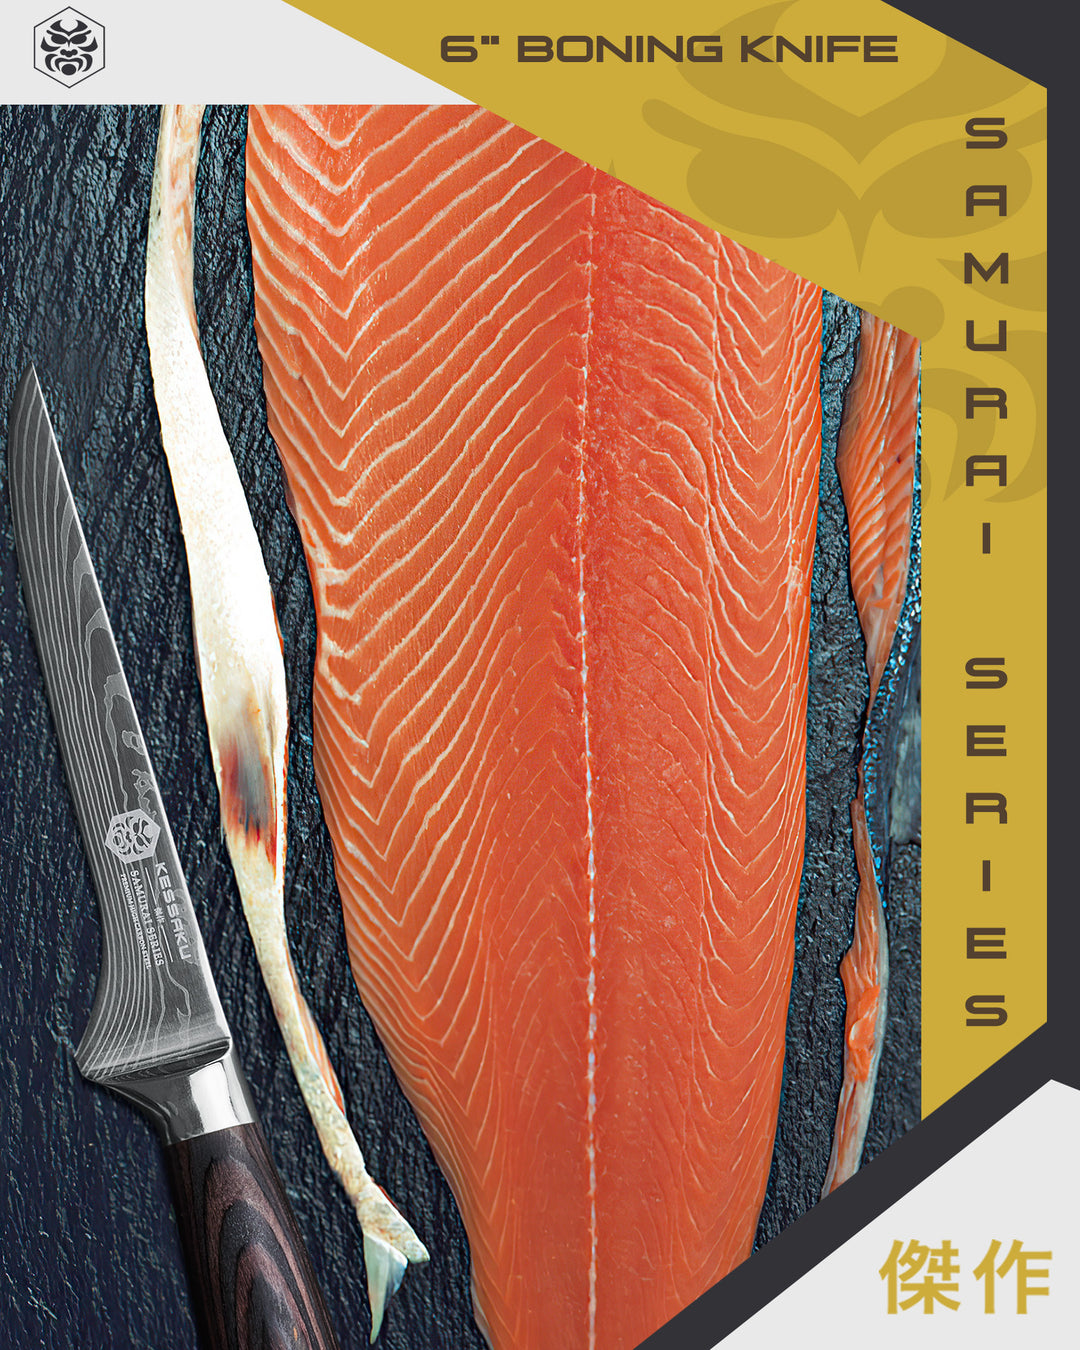 The Samurai Boning Knife used to filet a large salmon